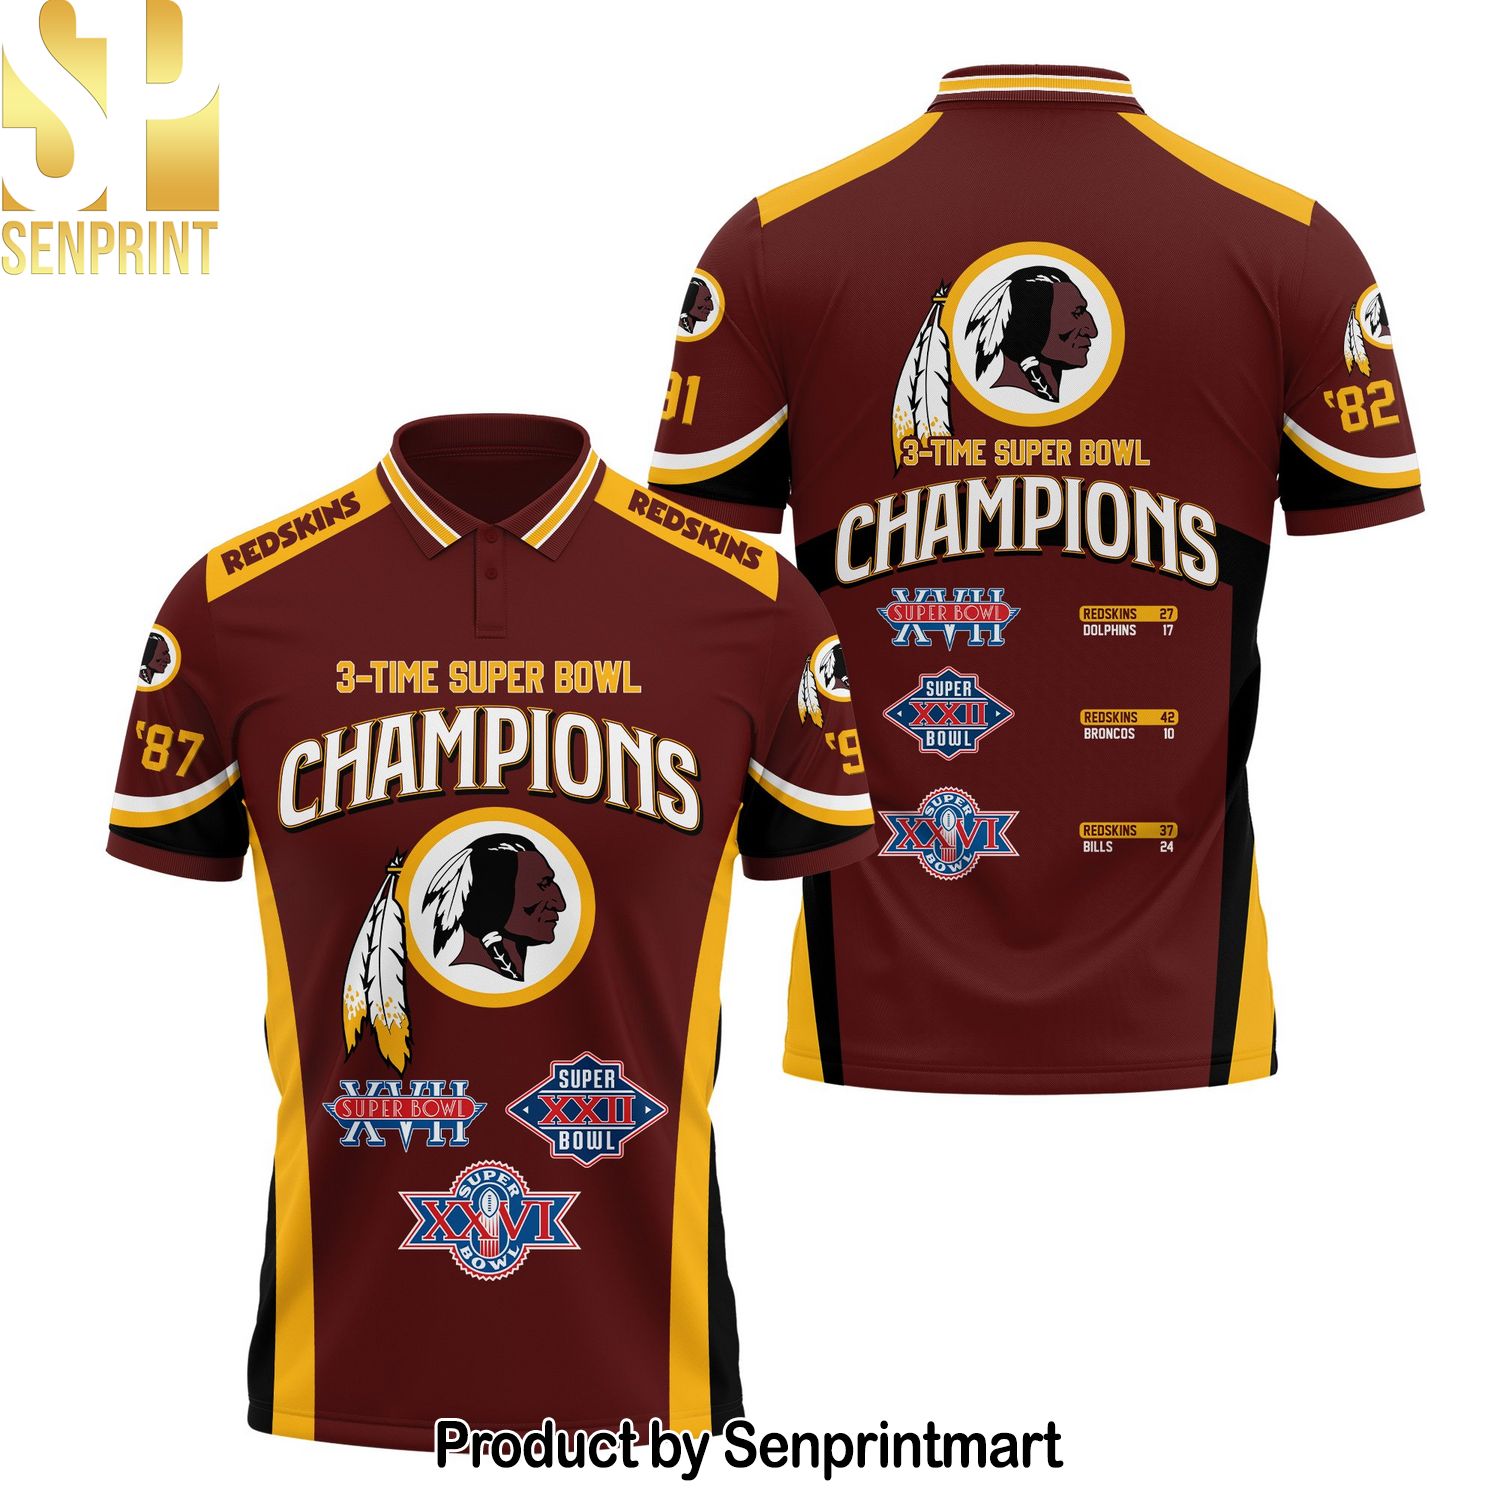 Washington Commanders Champions T-Shirt